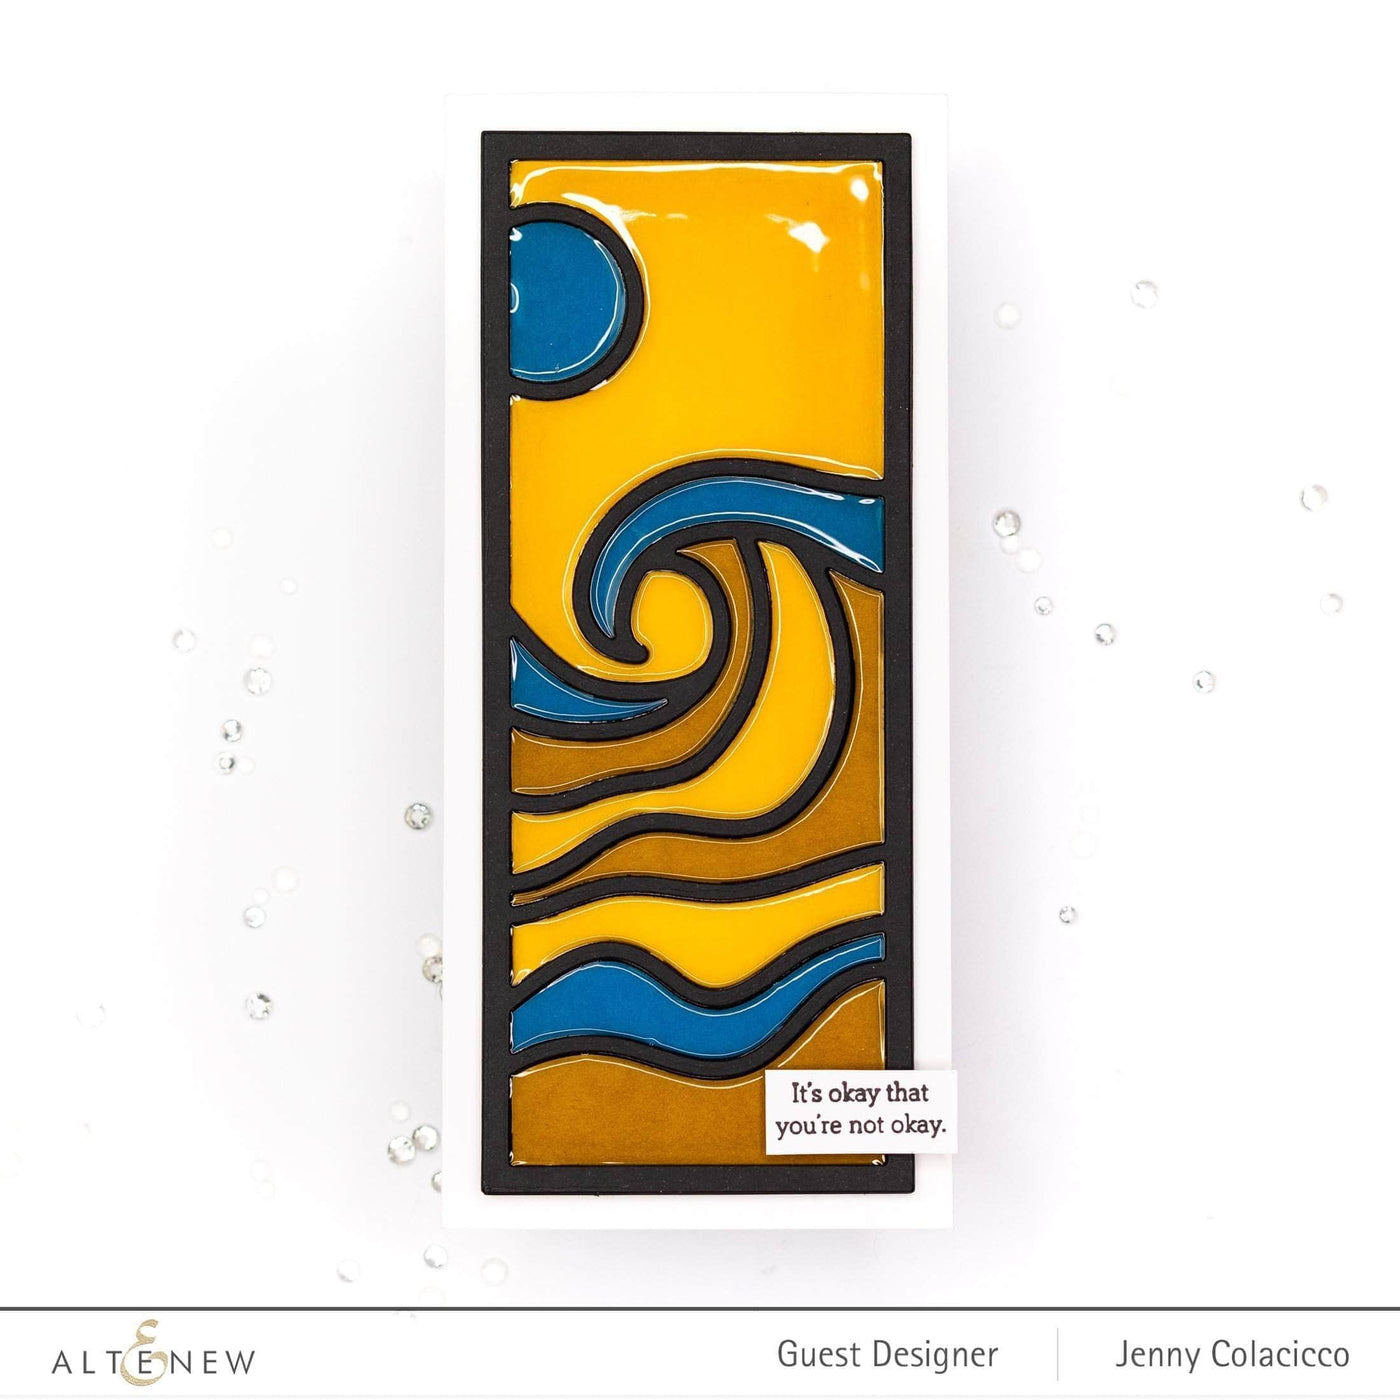 Part A-Glitz Art Craft Co.,LTD Dies Abstract Seascape Slim Cover Die